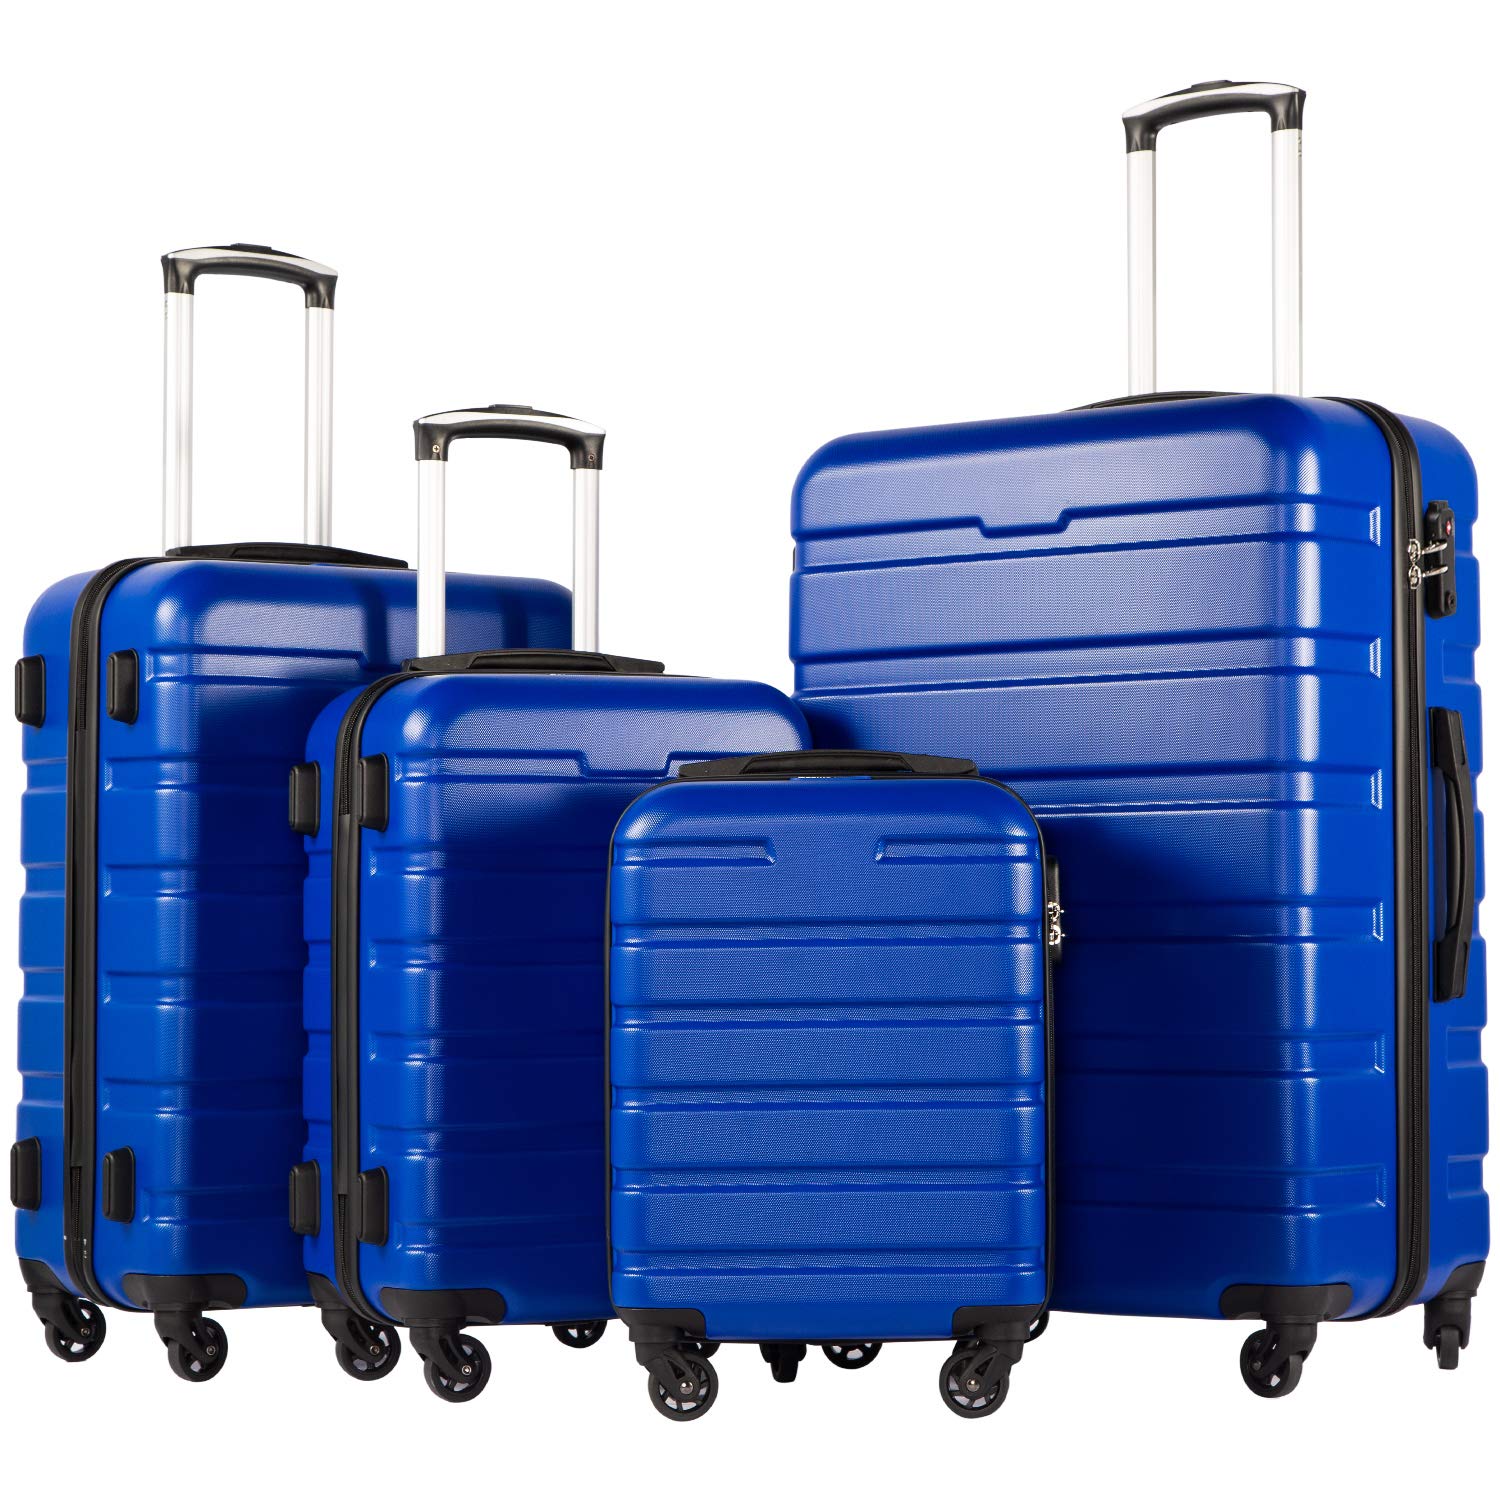 Best luggage sets for international travel 2023